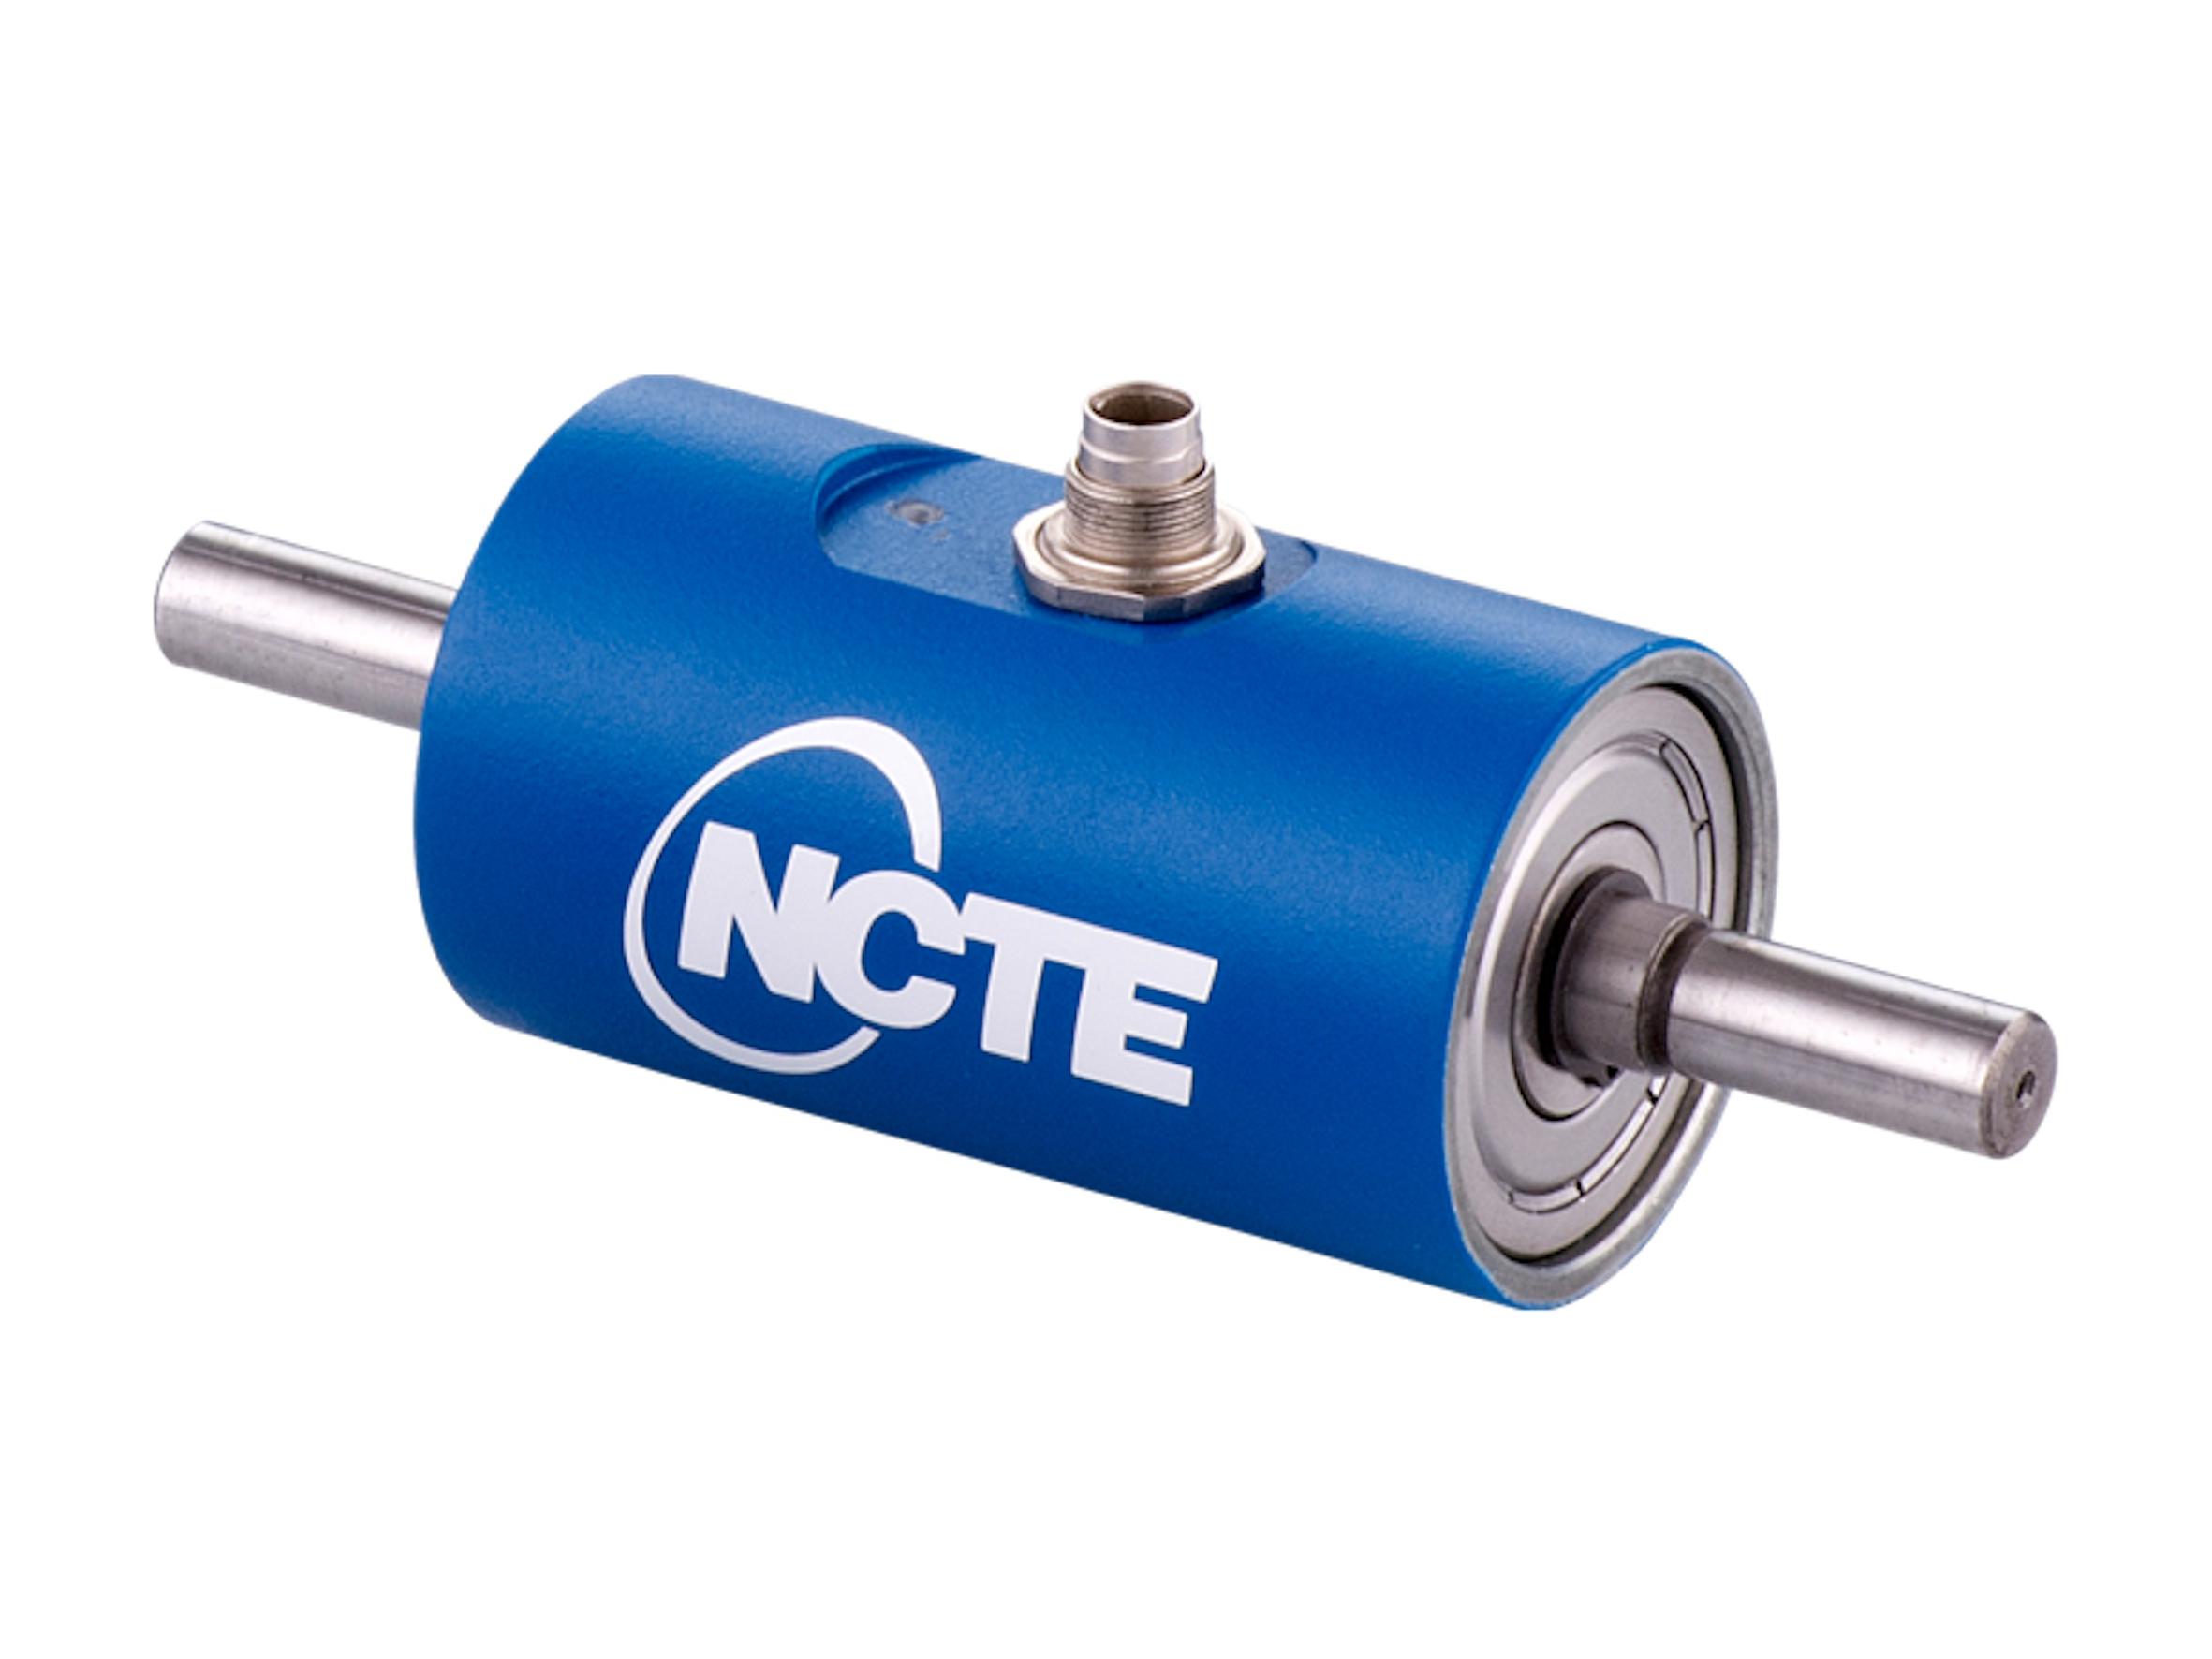 NCTE expands 2300 series torque sensors